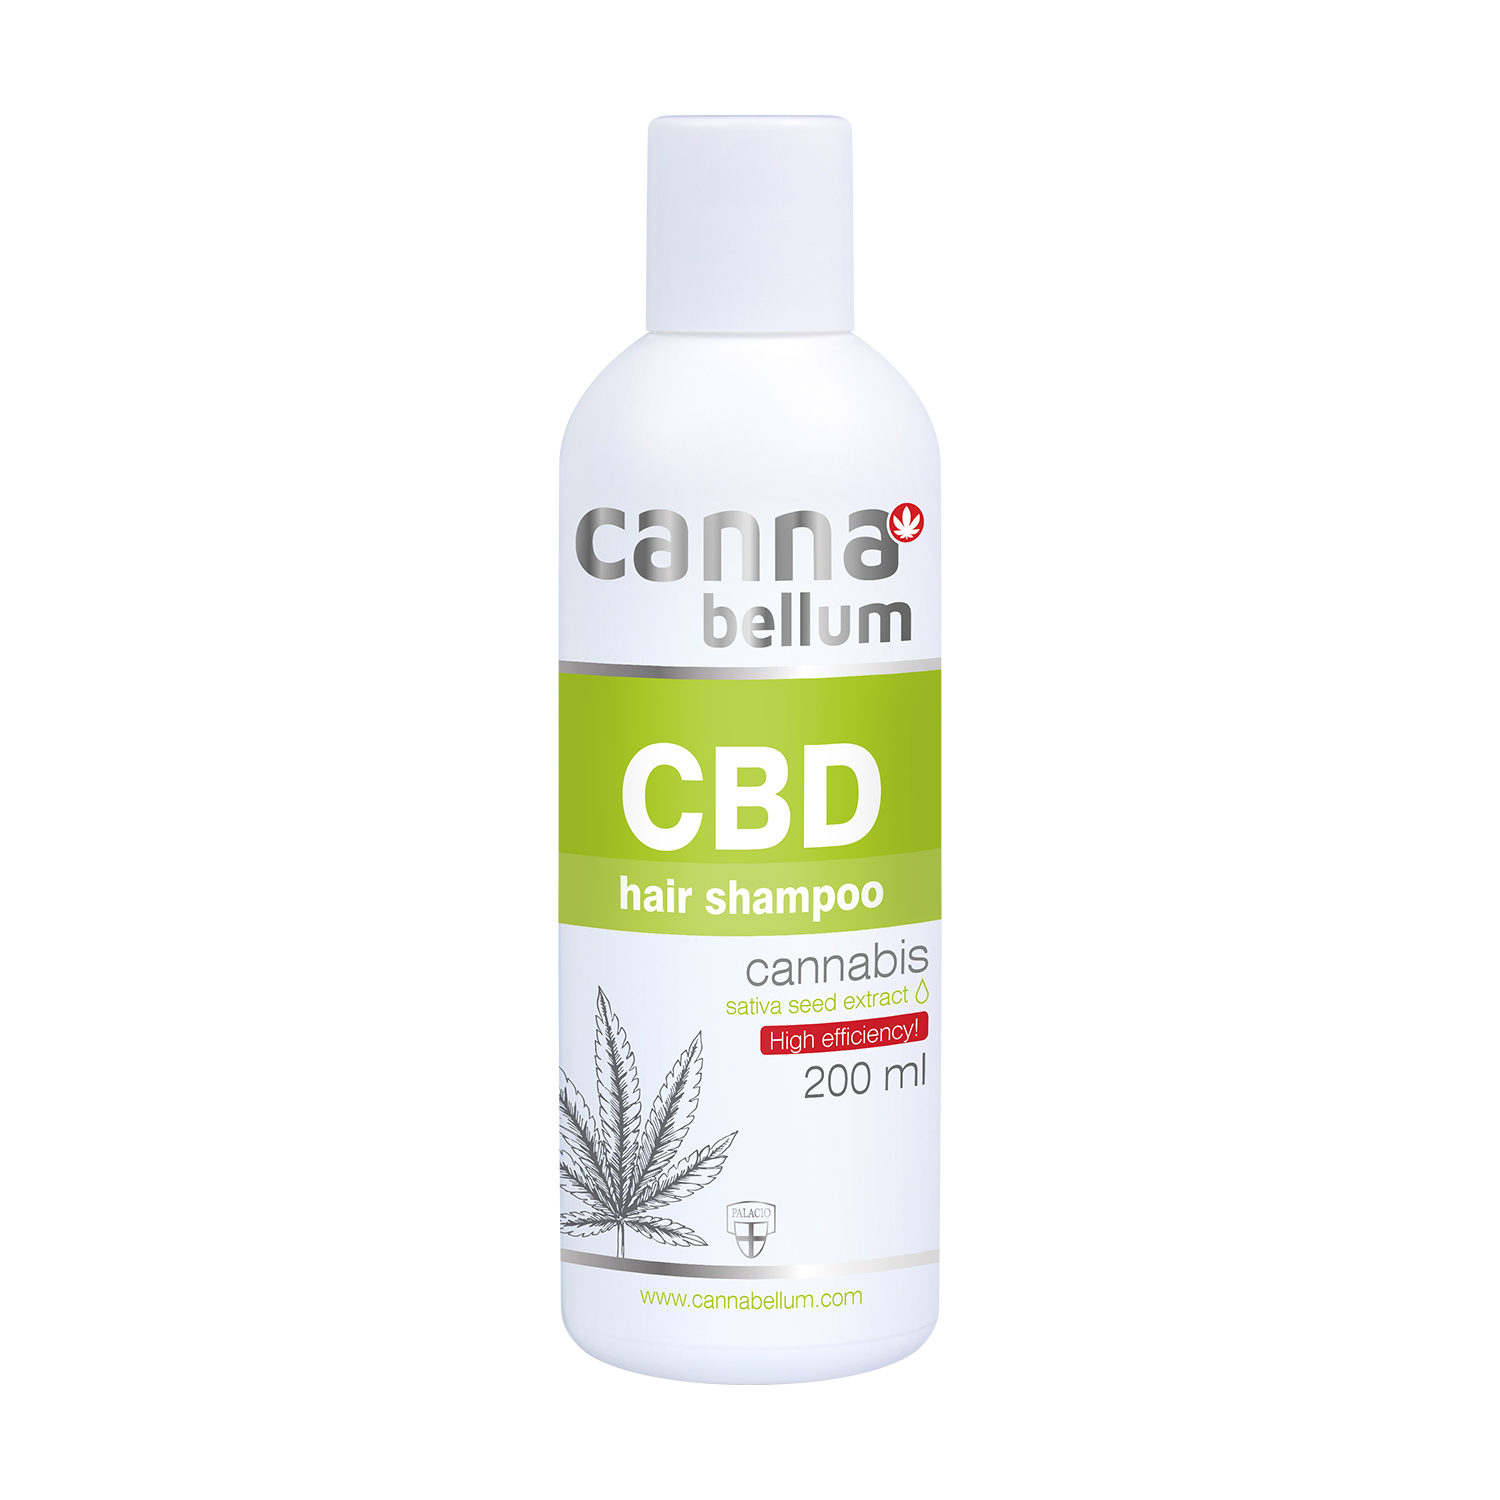 Cannabellum CBD hair shampoo 200ml P1251 WEB 84